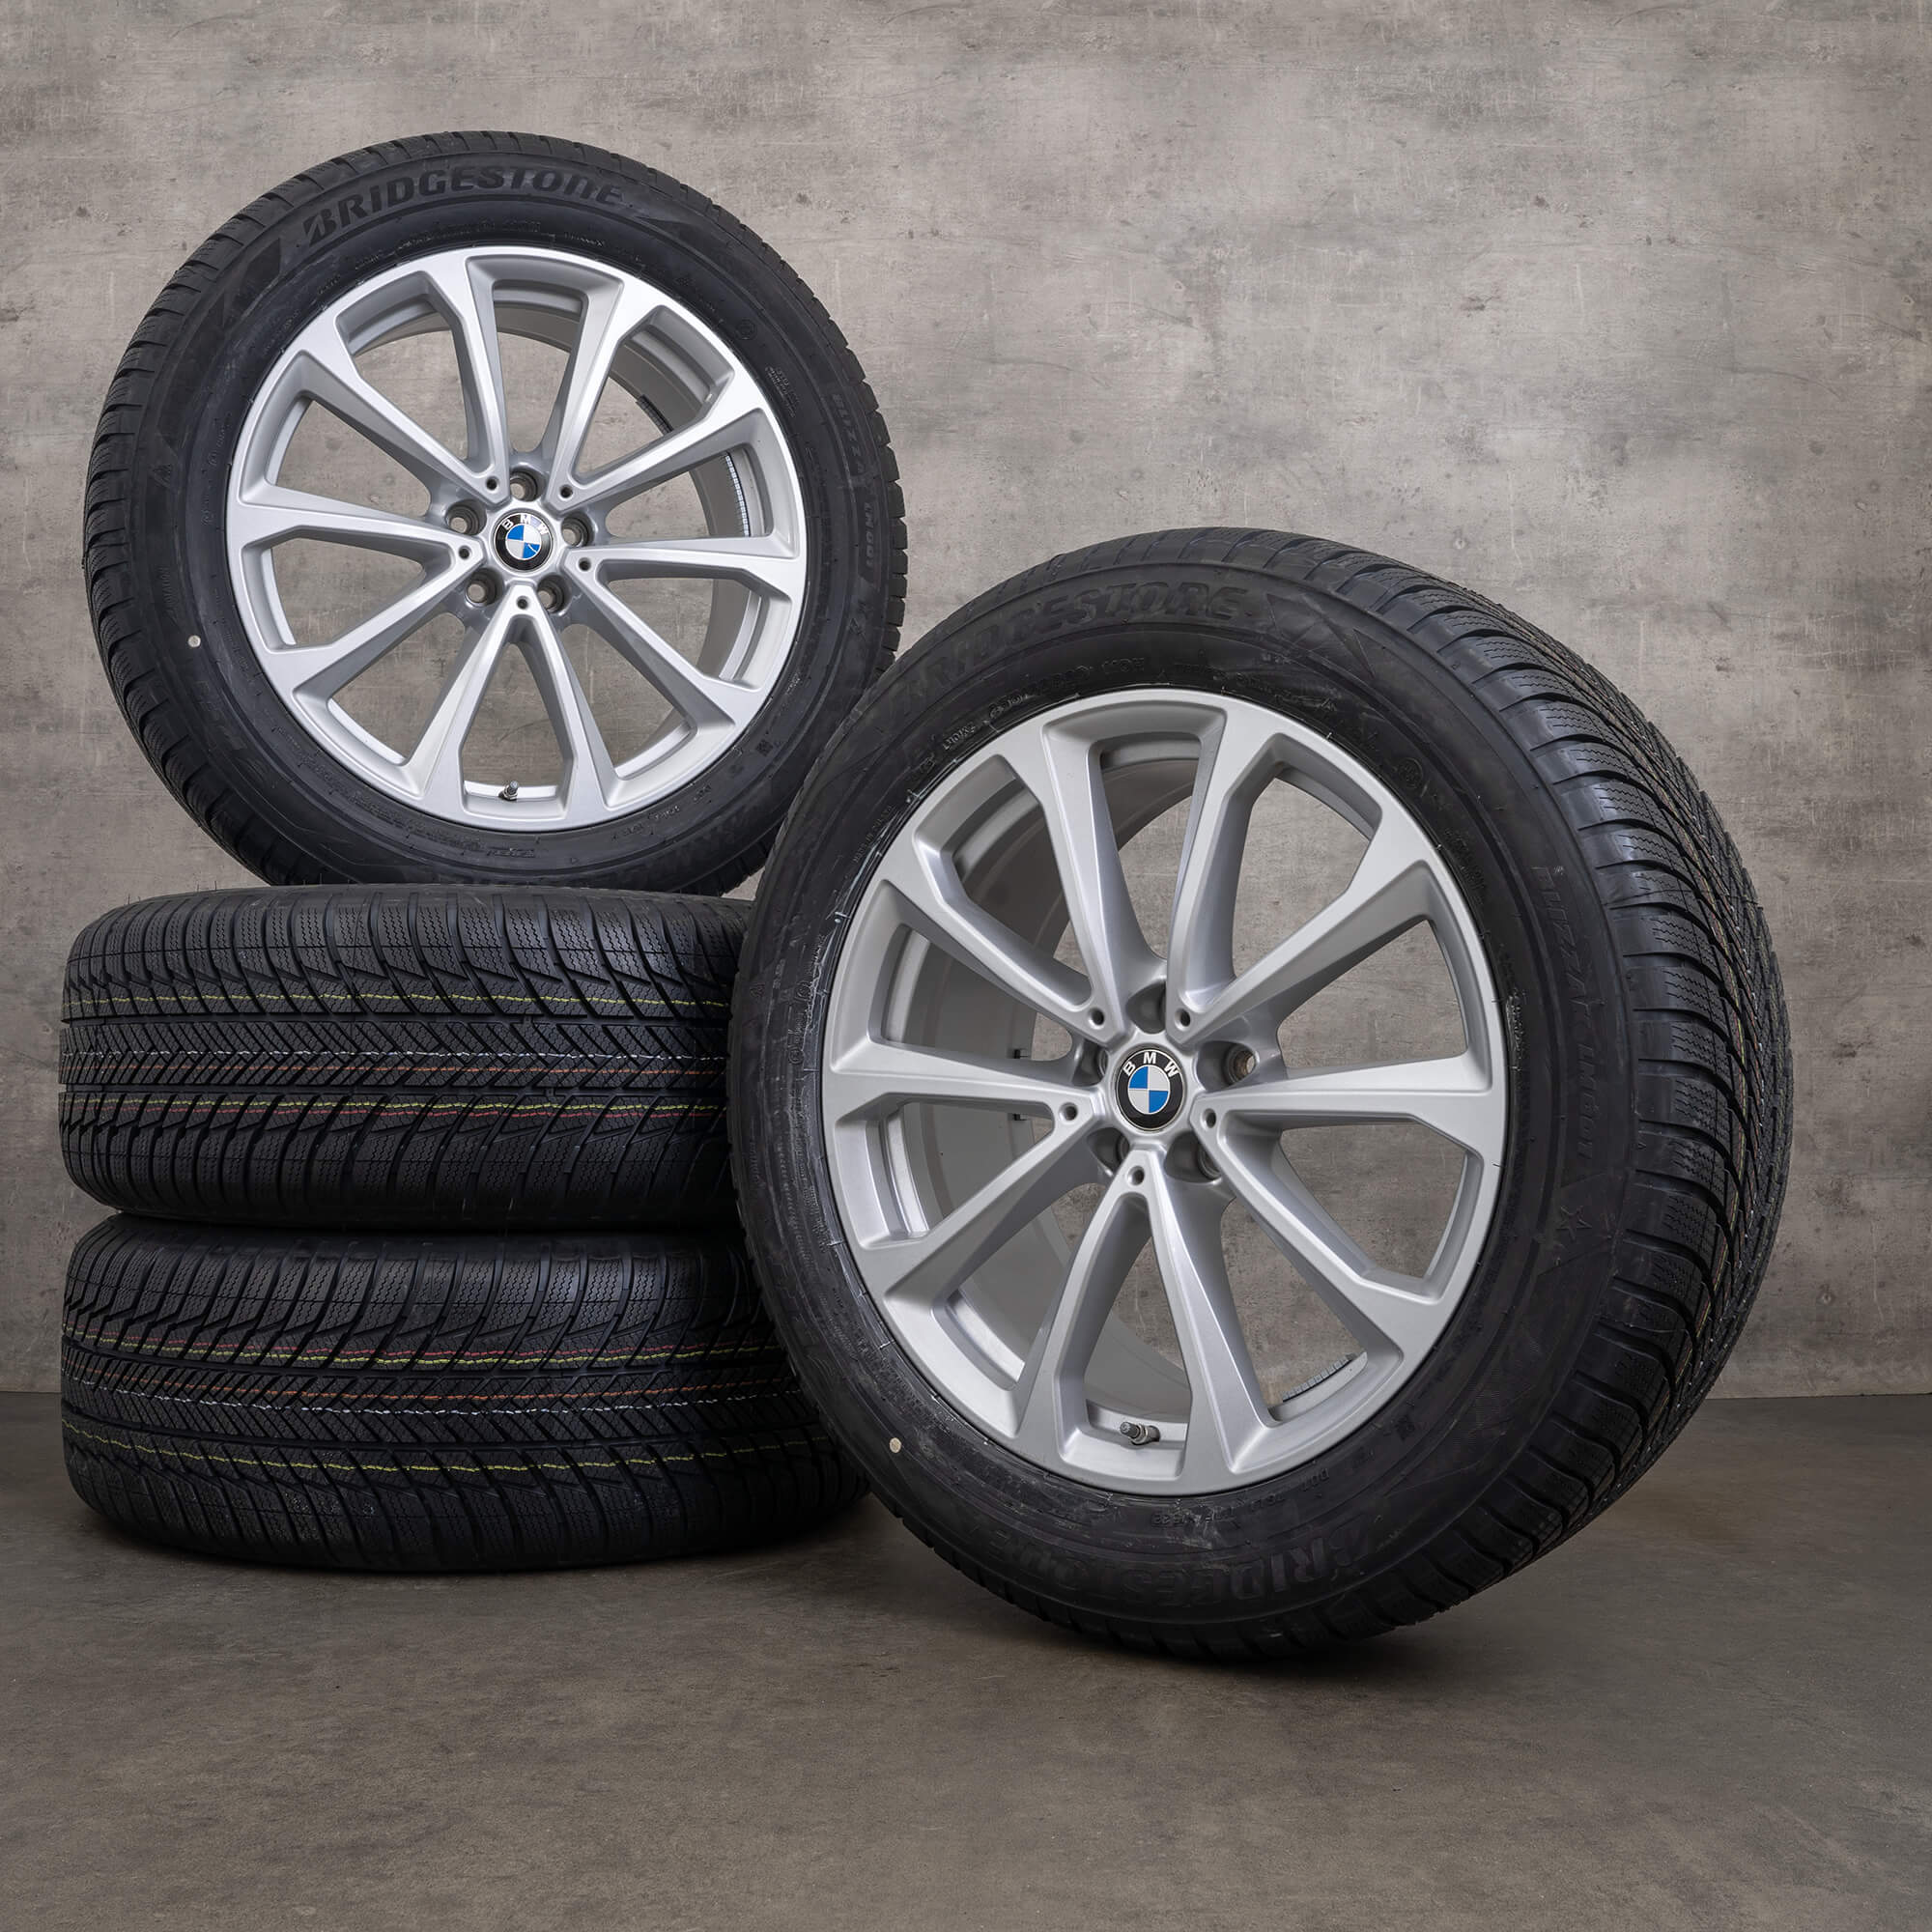 BMW X7 G07 winter wheels 20 inch rims tires 6880688 Styling 750 silver